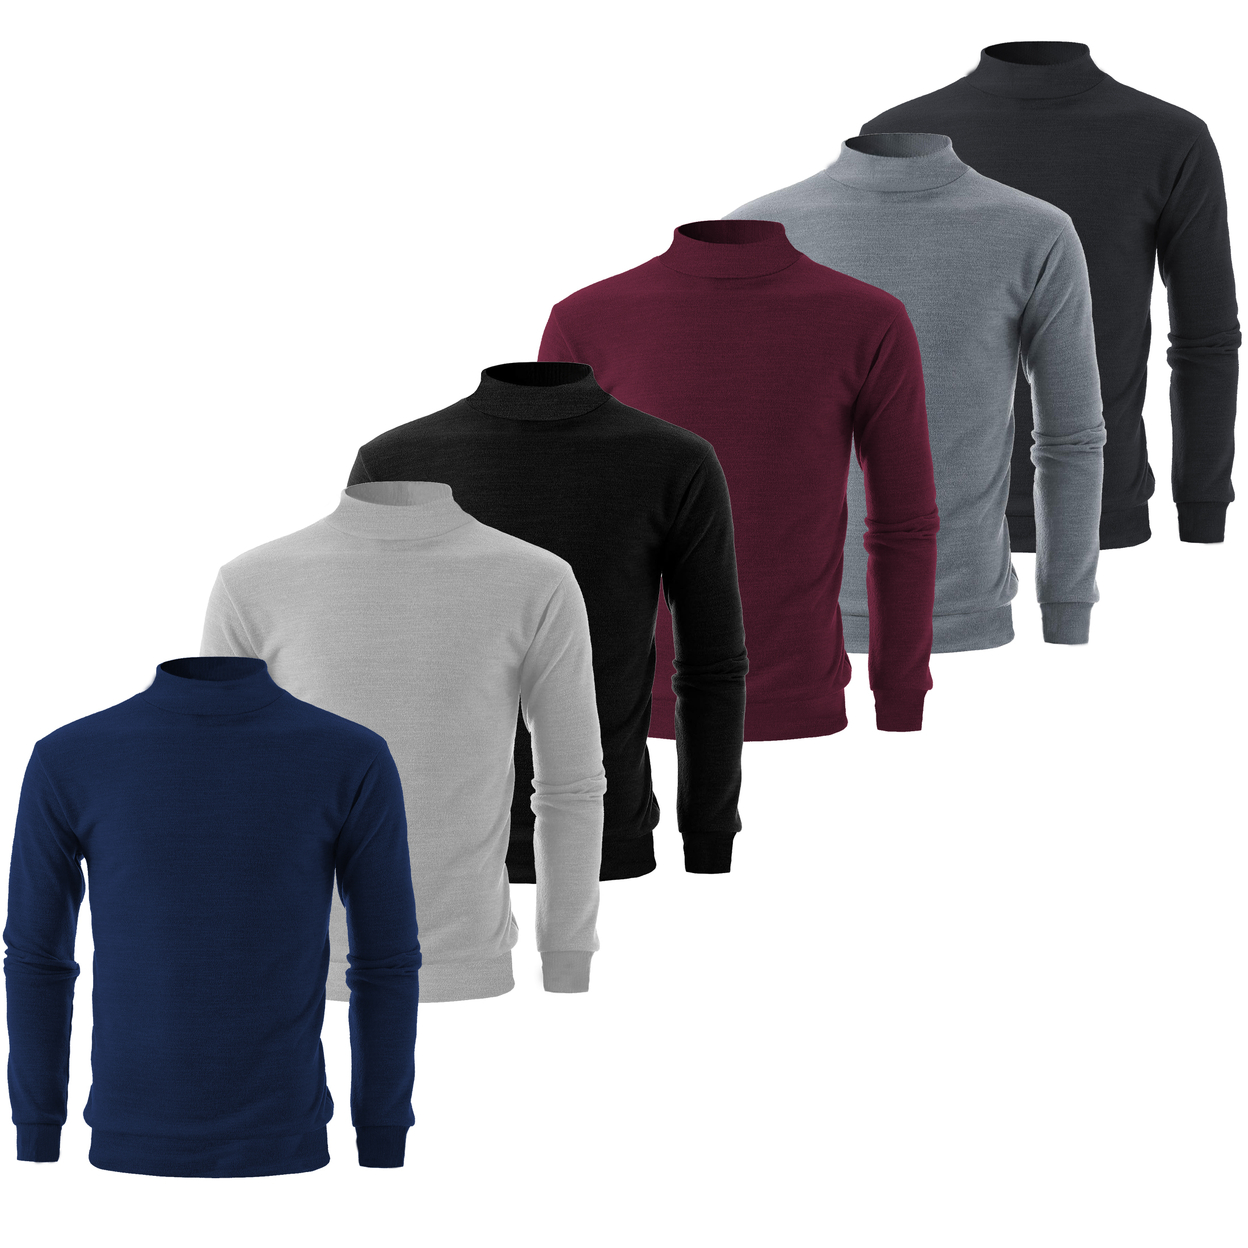 3-Pack: Men's Winter Warm Cozy Knit Slim Fit Mock Neck Sweater - Medium